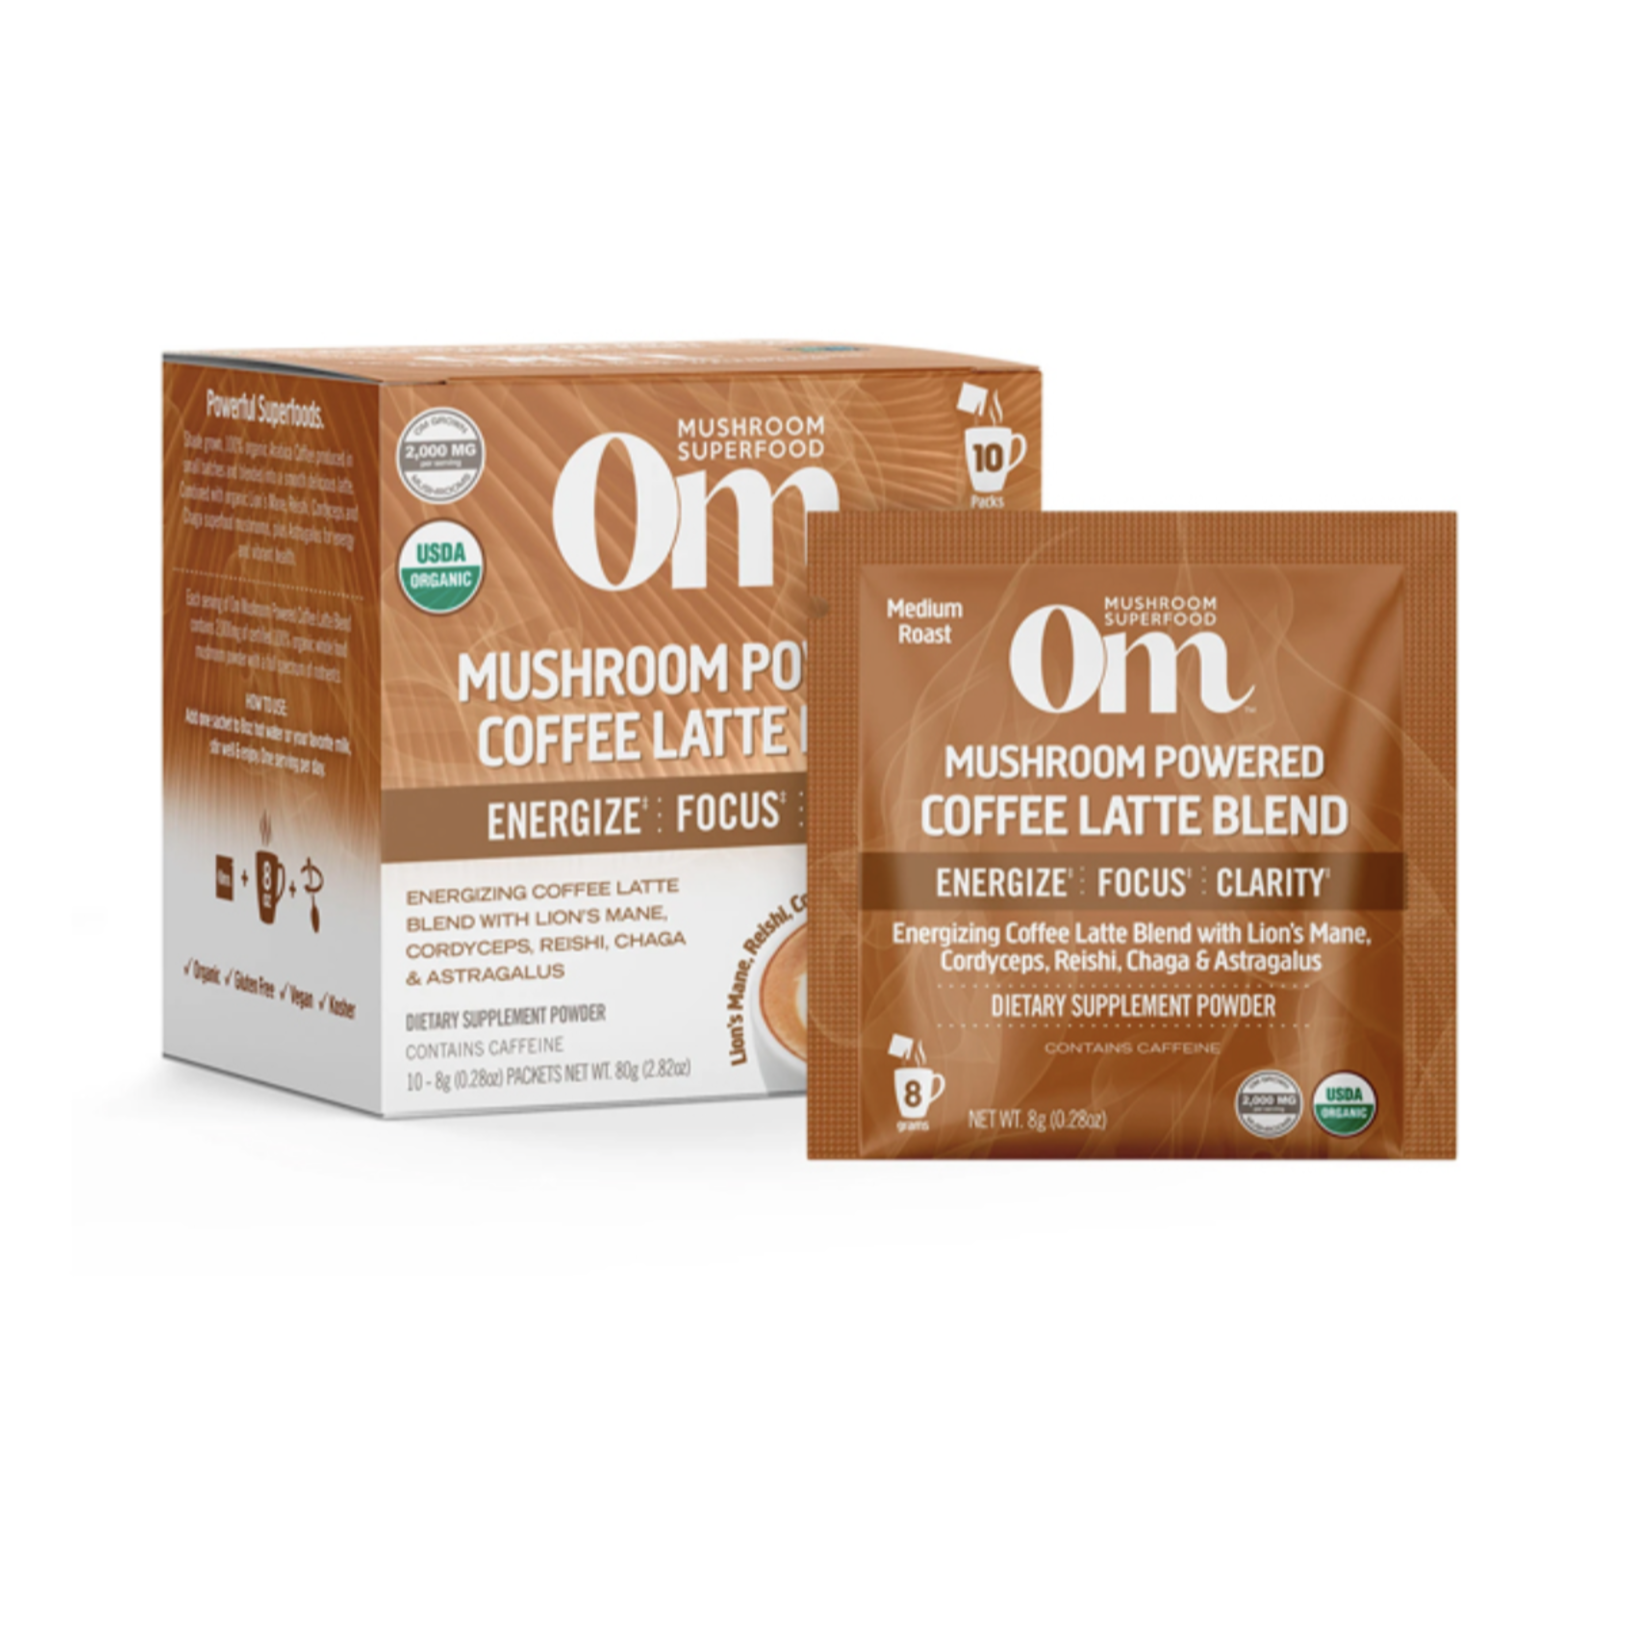 Om Mushroom Om - Box of Mushroom Coffee Latte Blend - 10 Pack